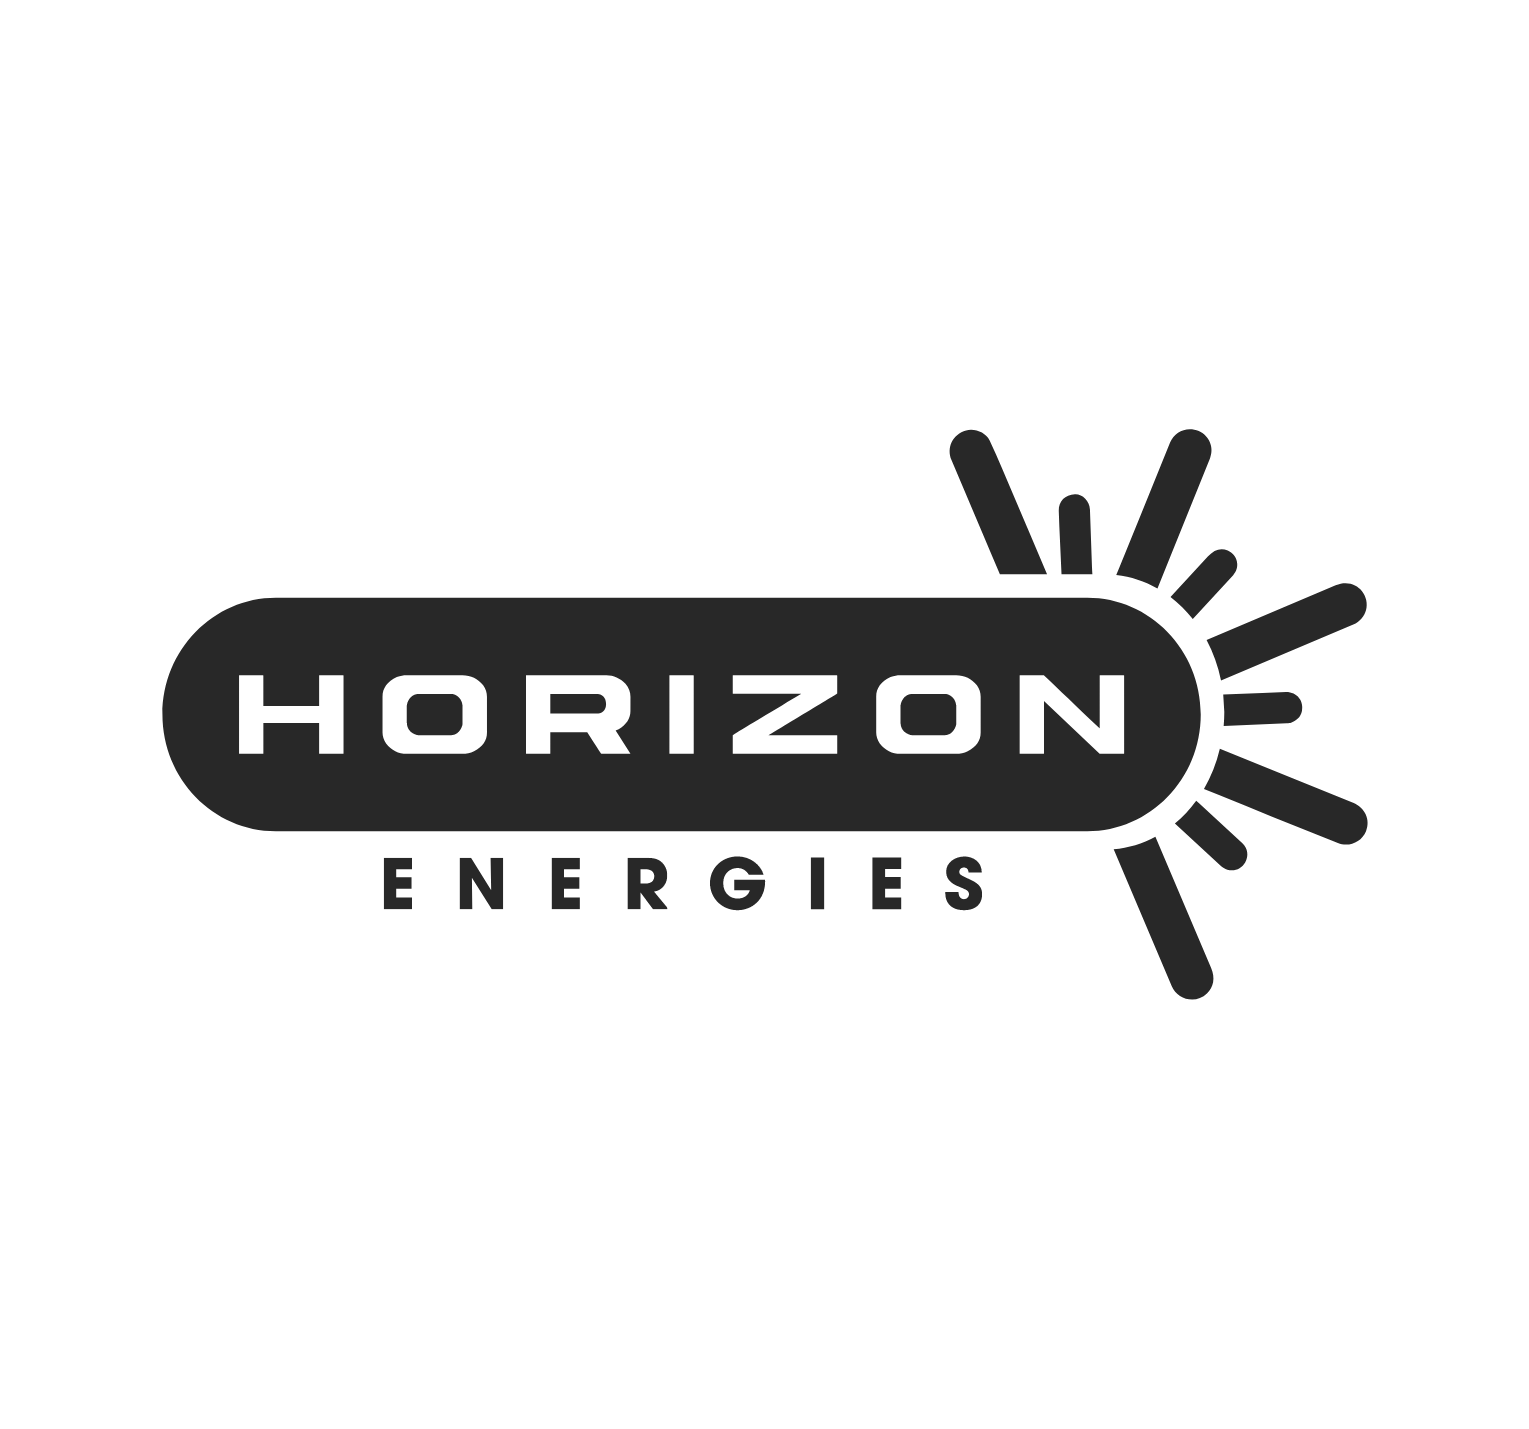 HORIZON ENERGIES